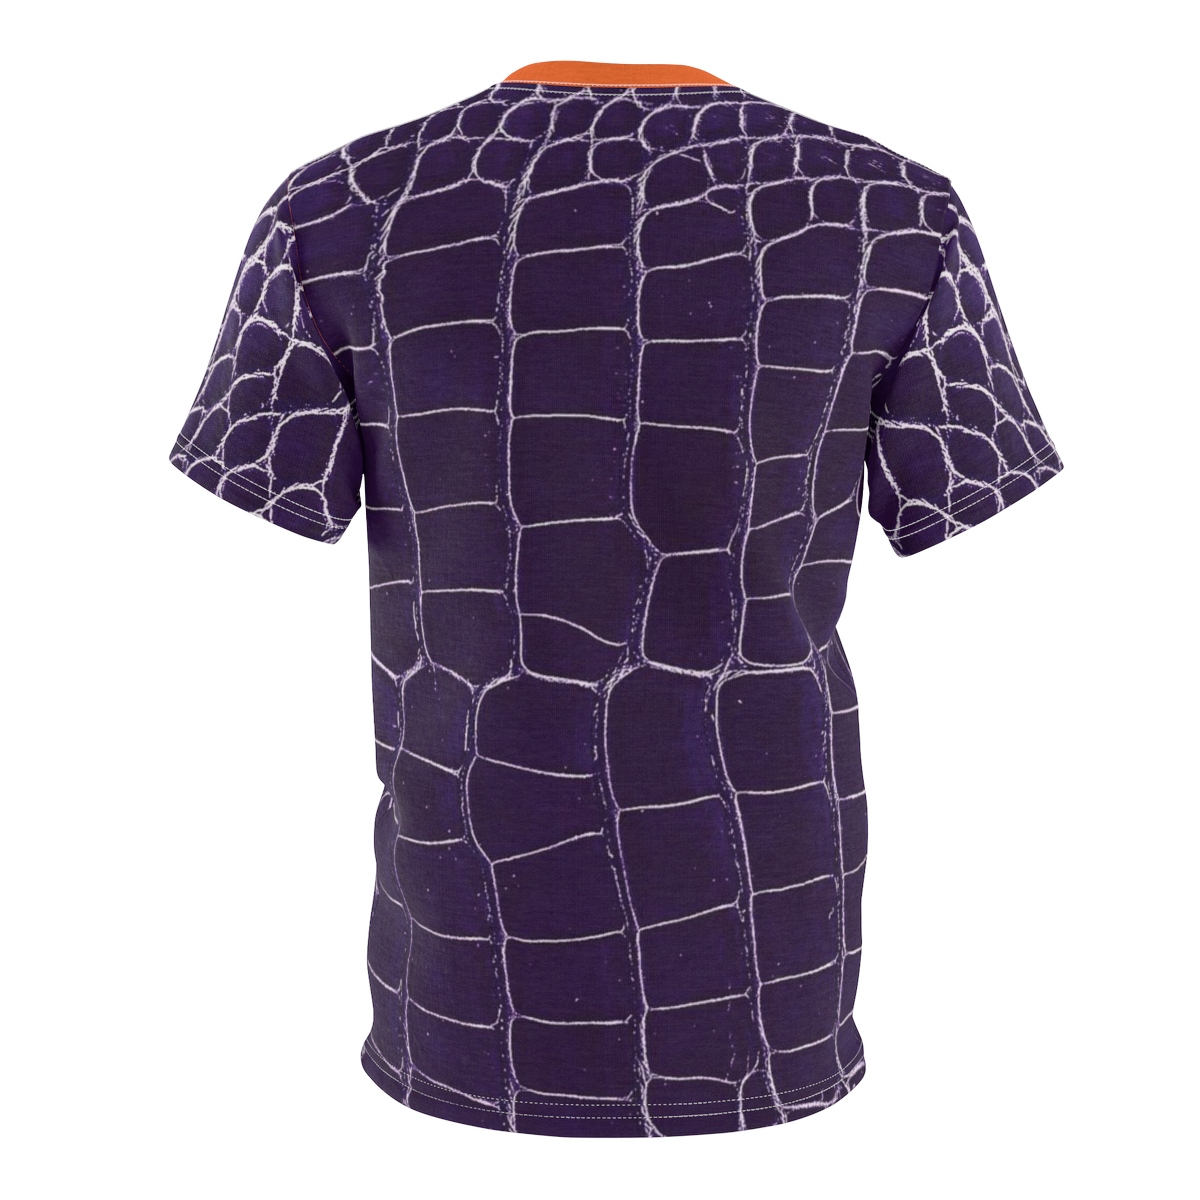 MasSir Charles is Not a Role Model | Purple Croc Barkley Posite Max Shirt